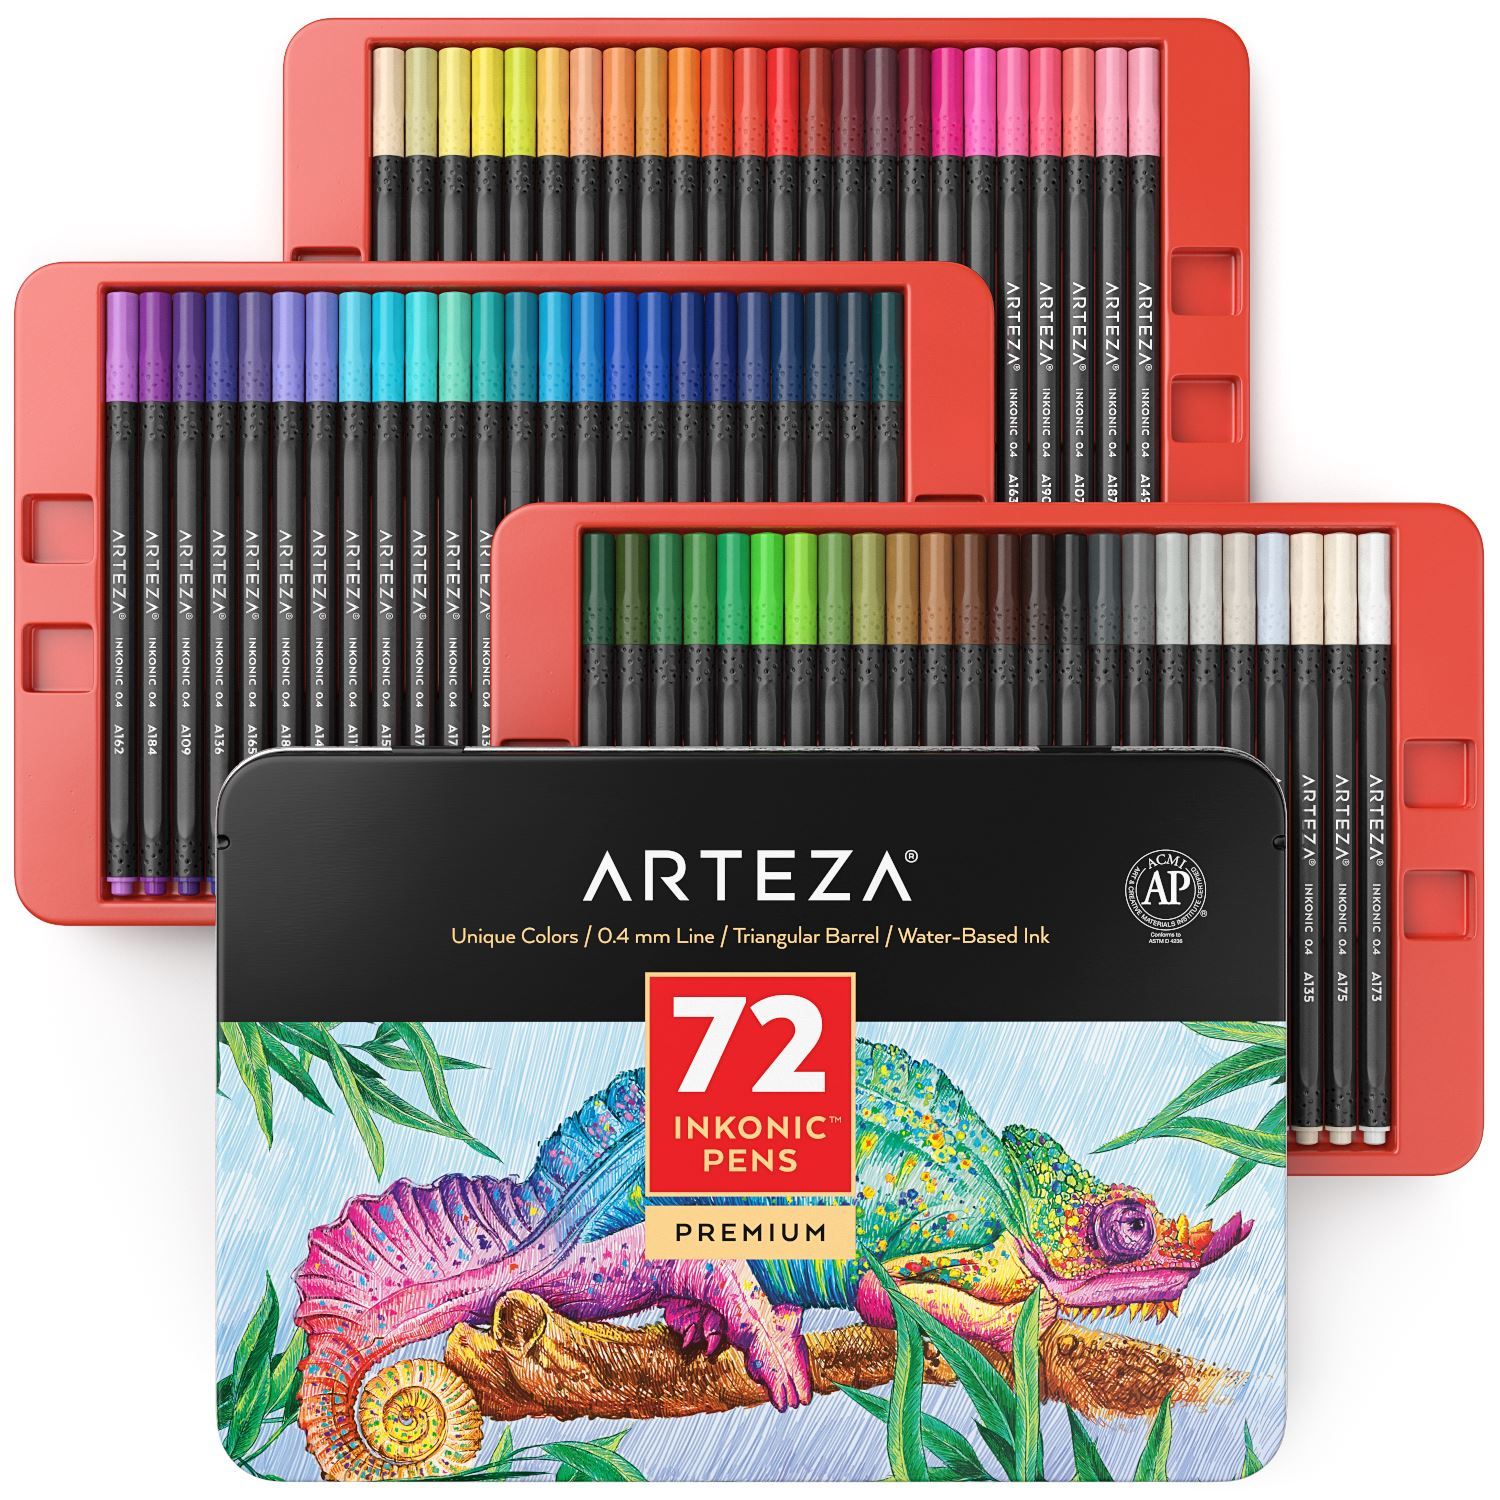 Featured image of post Arteza 72 Colored Pencils